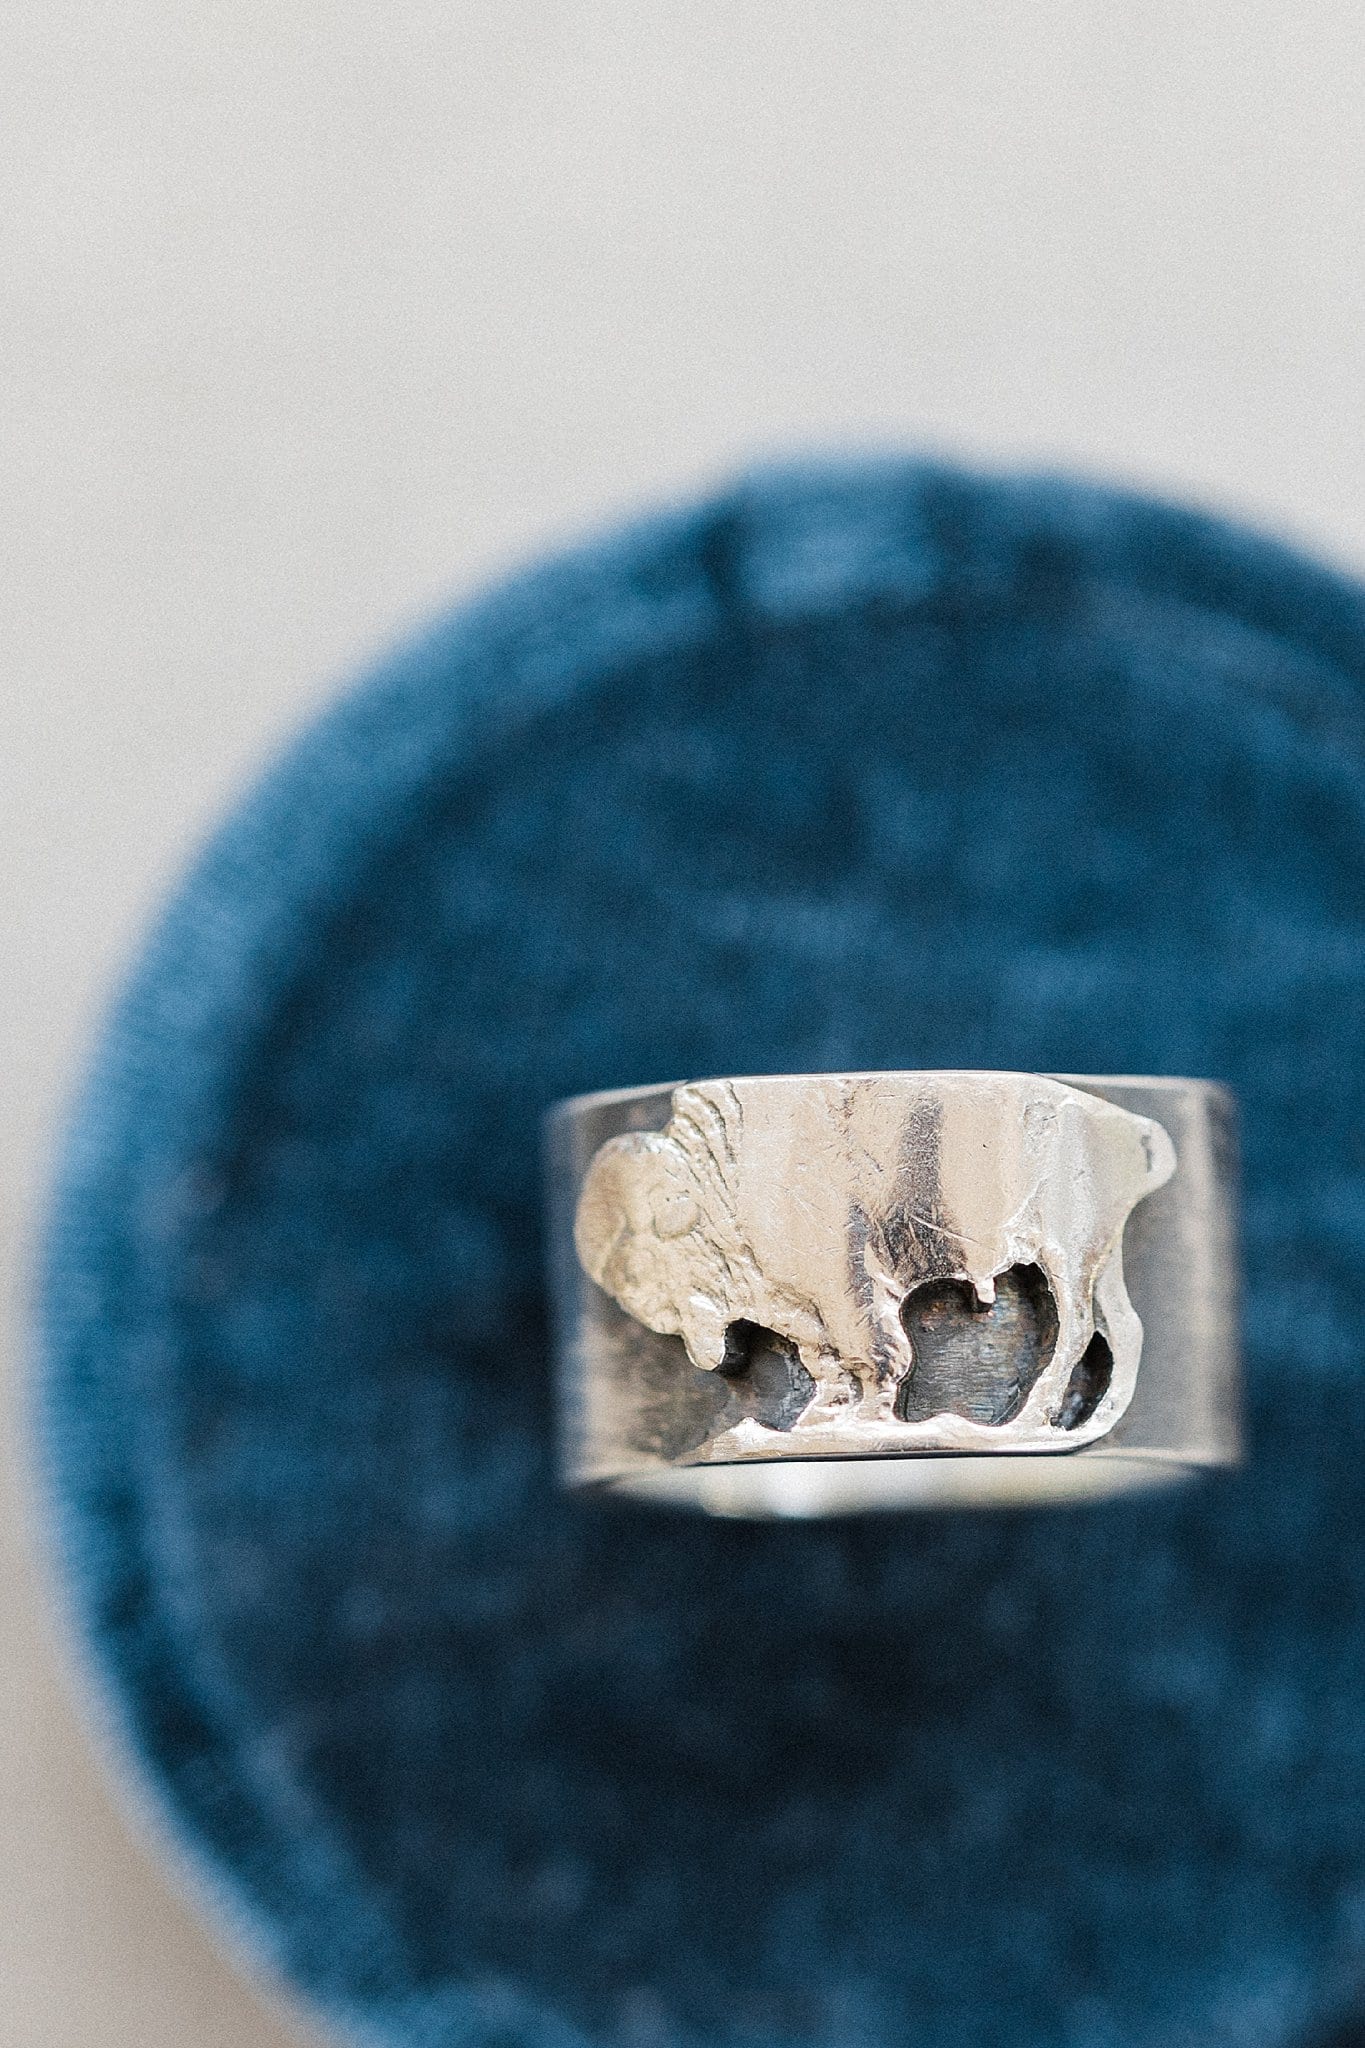 detail image of buffalo on groom's wedding ring